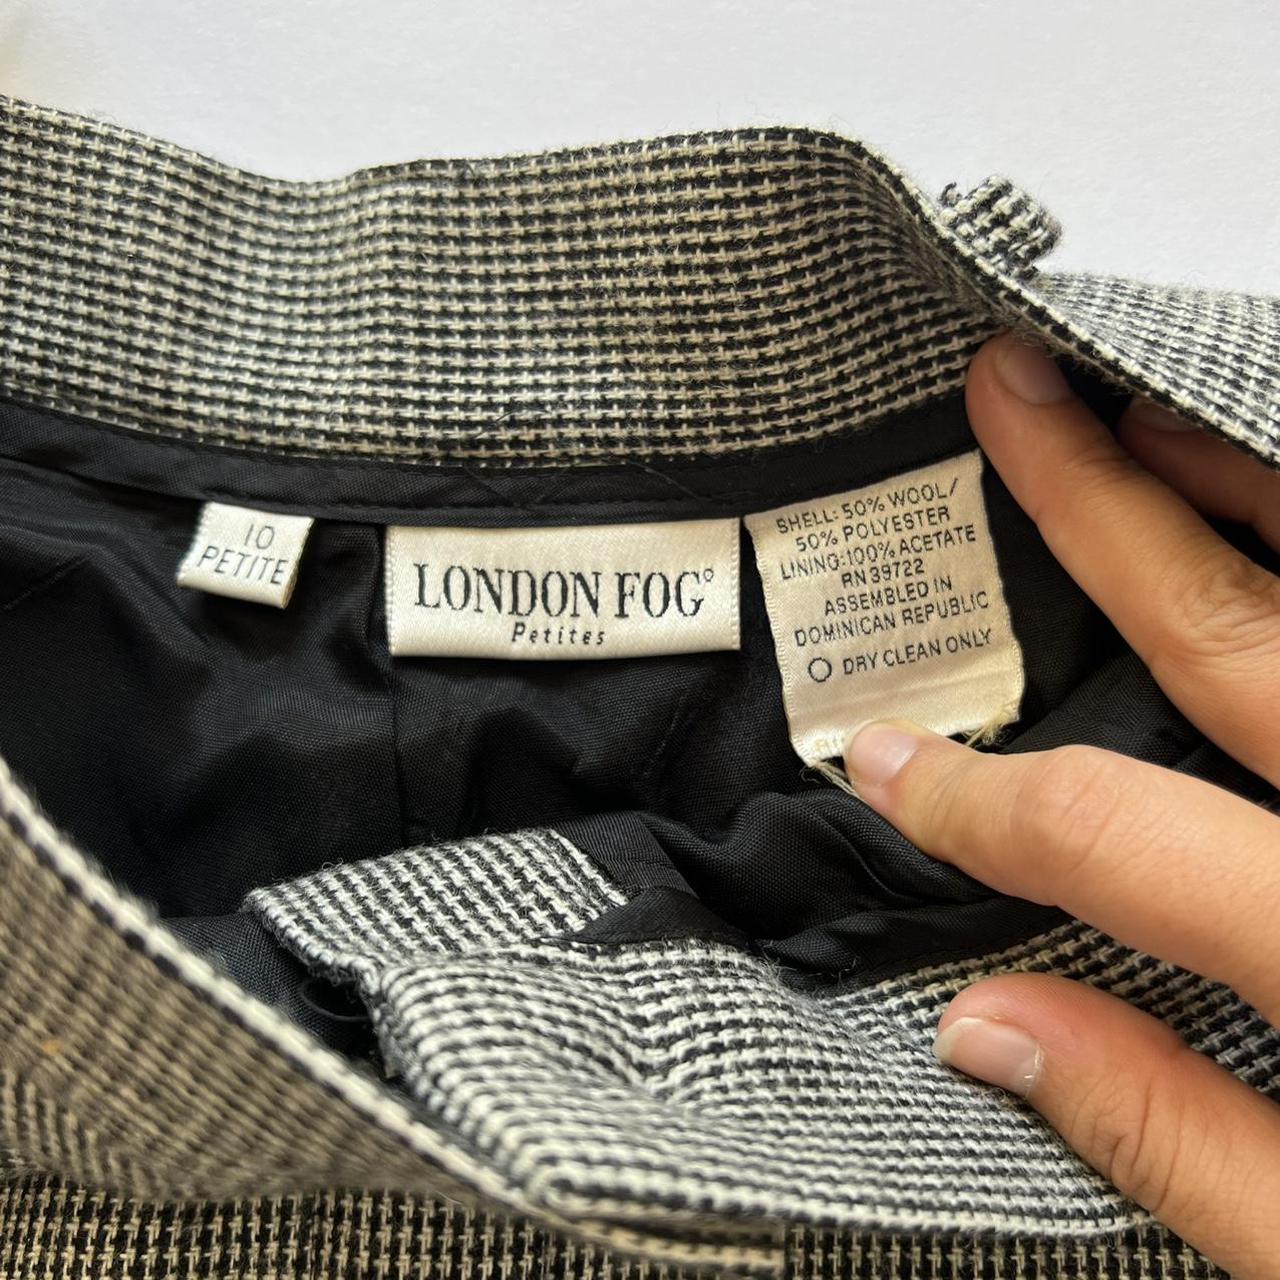 London Fog Women's Black and White Trousers (2)